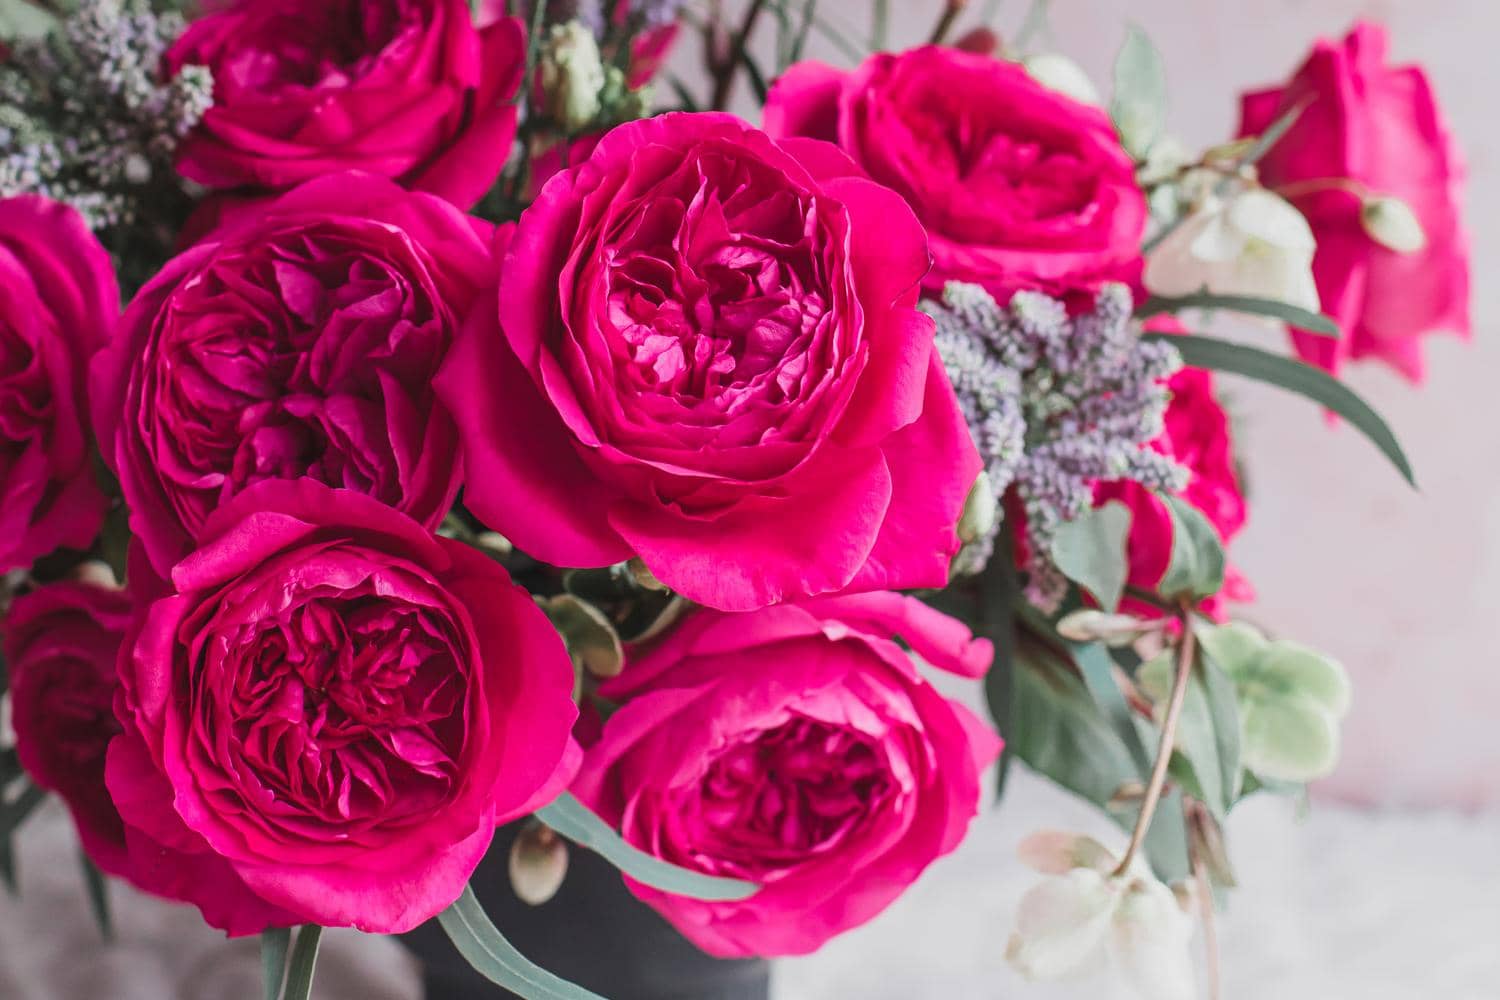 Capability roses pink vase arrangement